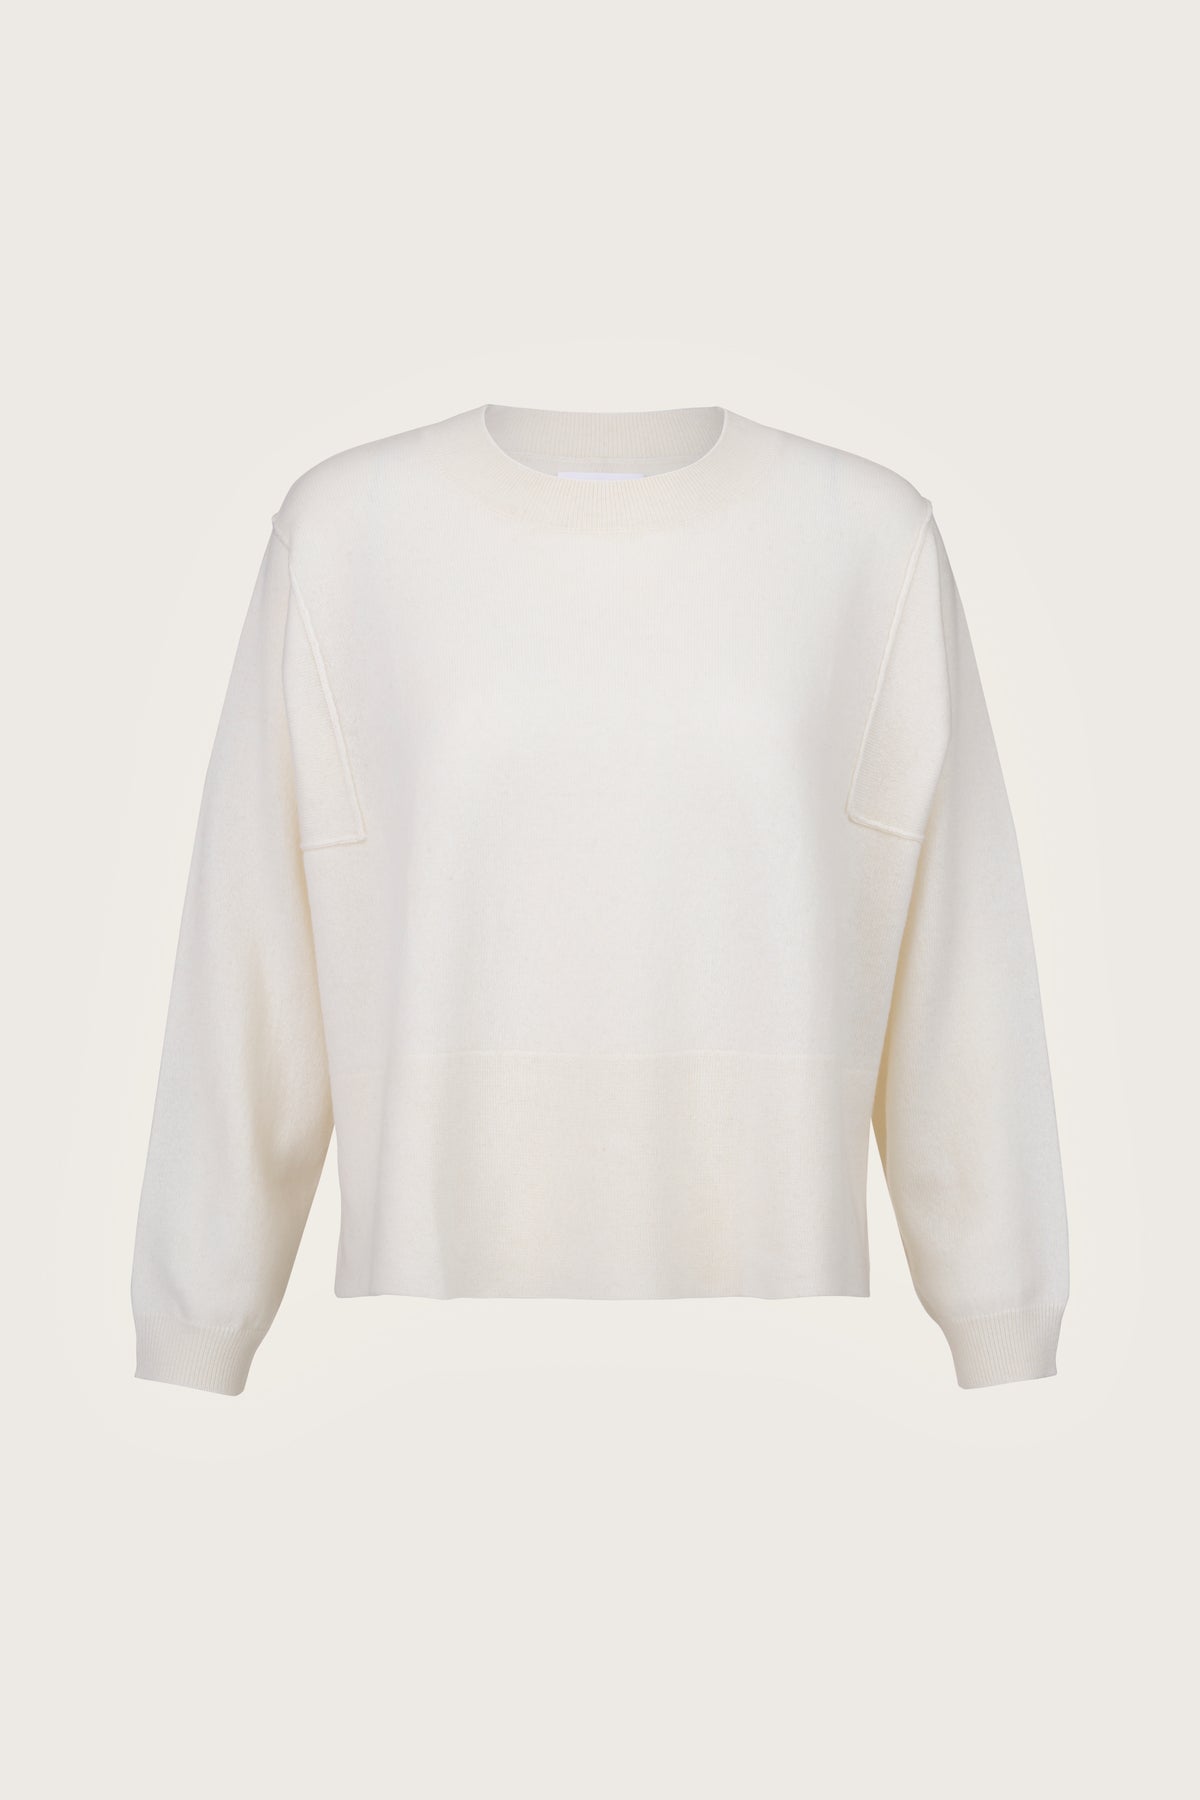 Round neck square cut arm cashmere jumper in winter white